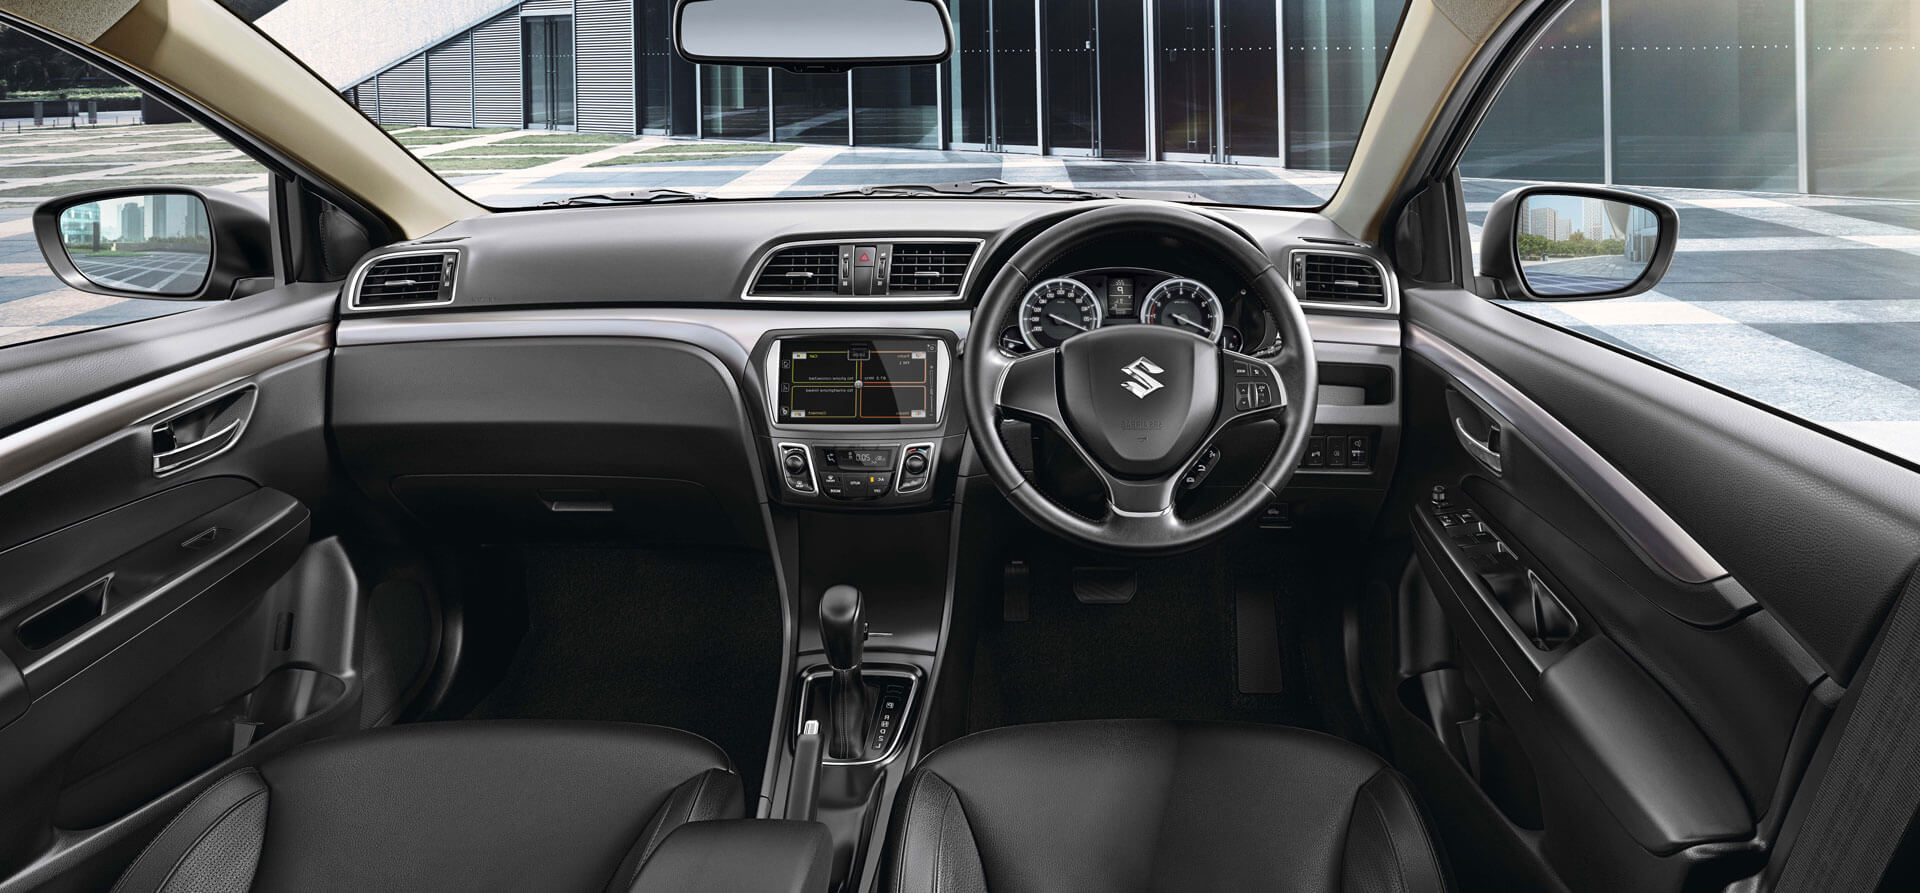 Ciaz - Maruti Suzuki Ciaz Price (GST Rates), Review, Specs, Interiors,  Photos | ET Auto